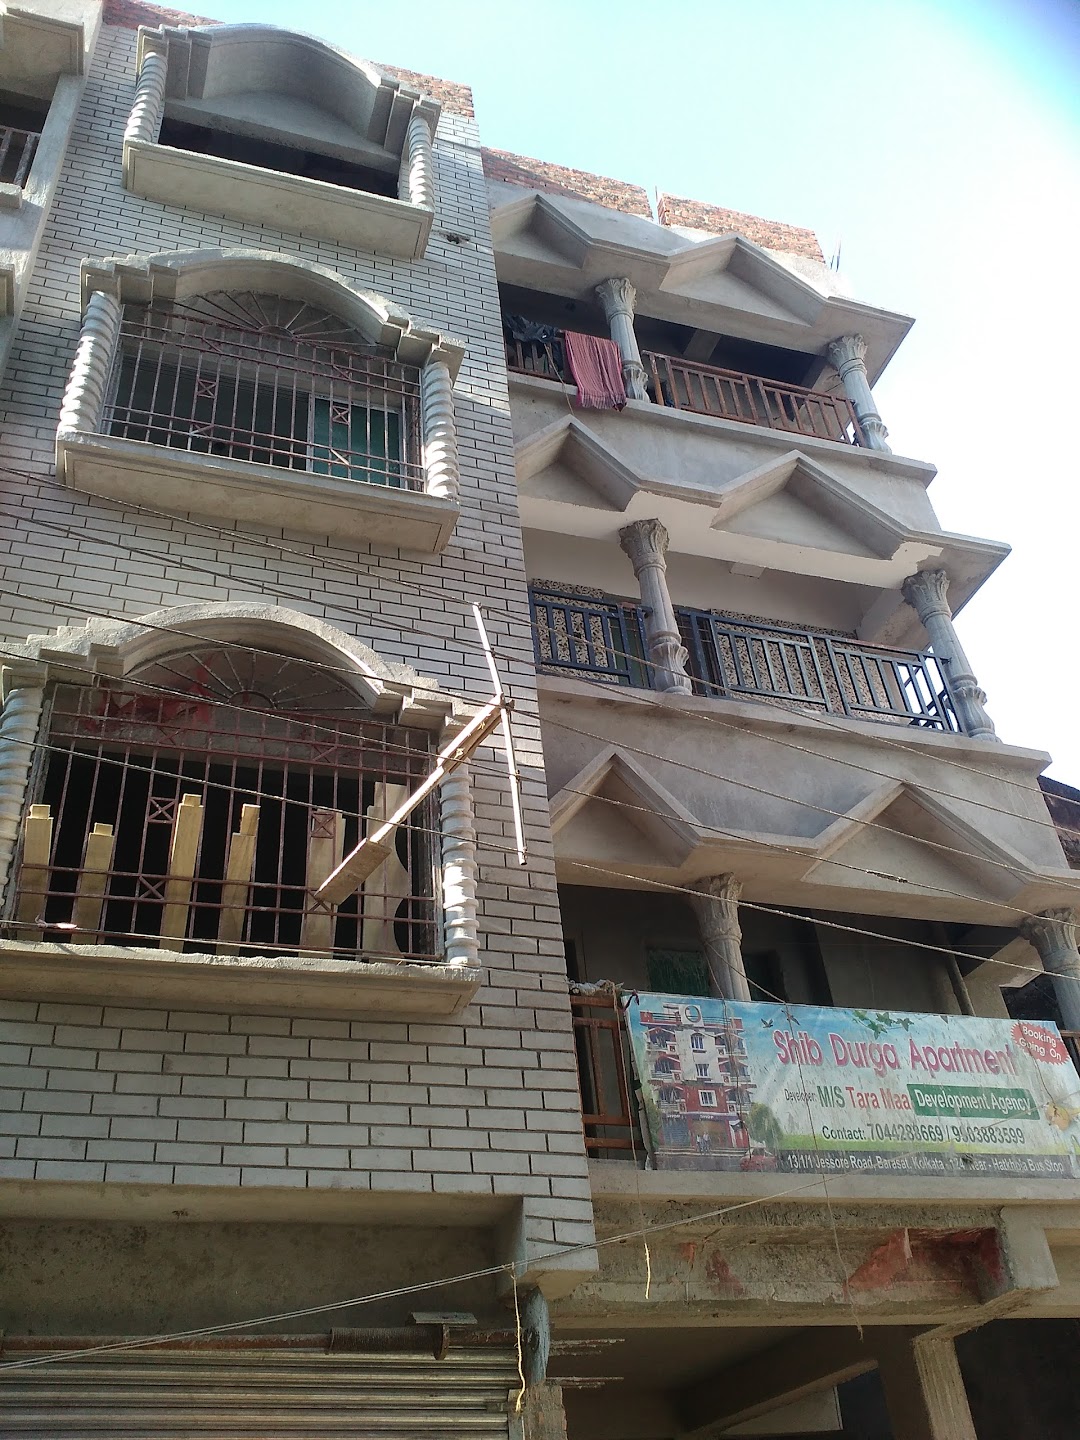 Shib Durga Apartment